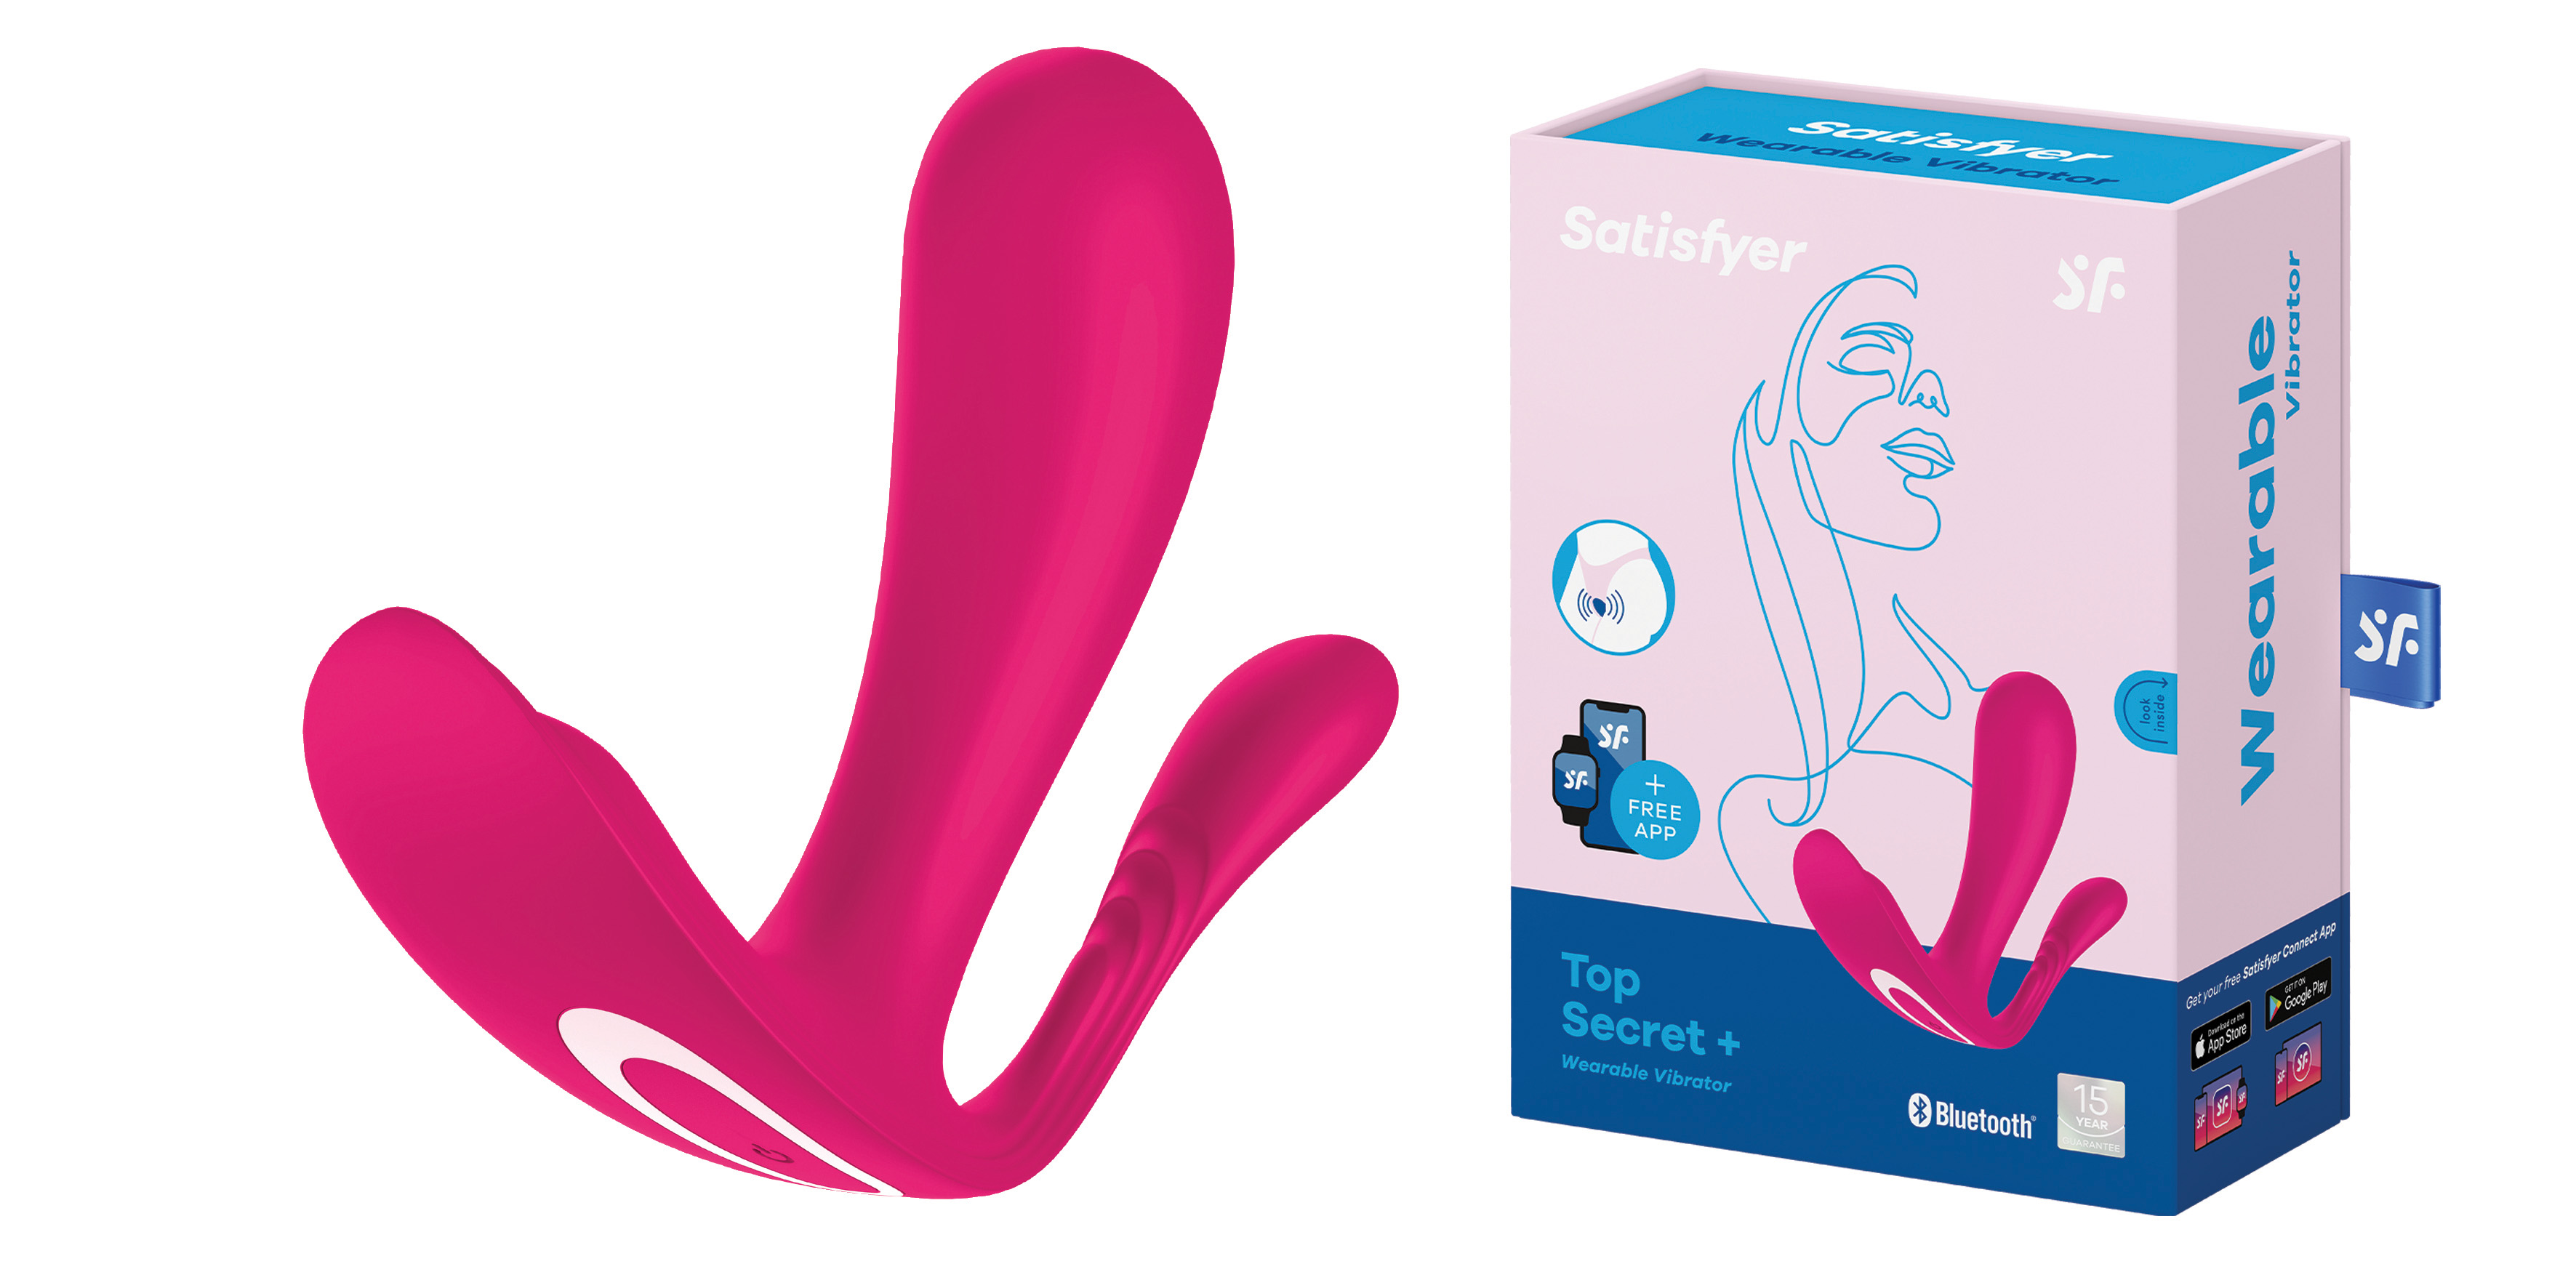 SATISFYER Top Secret + Vibrator pink